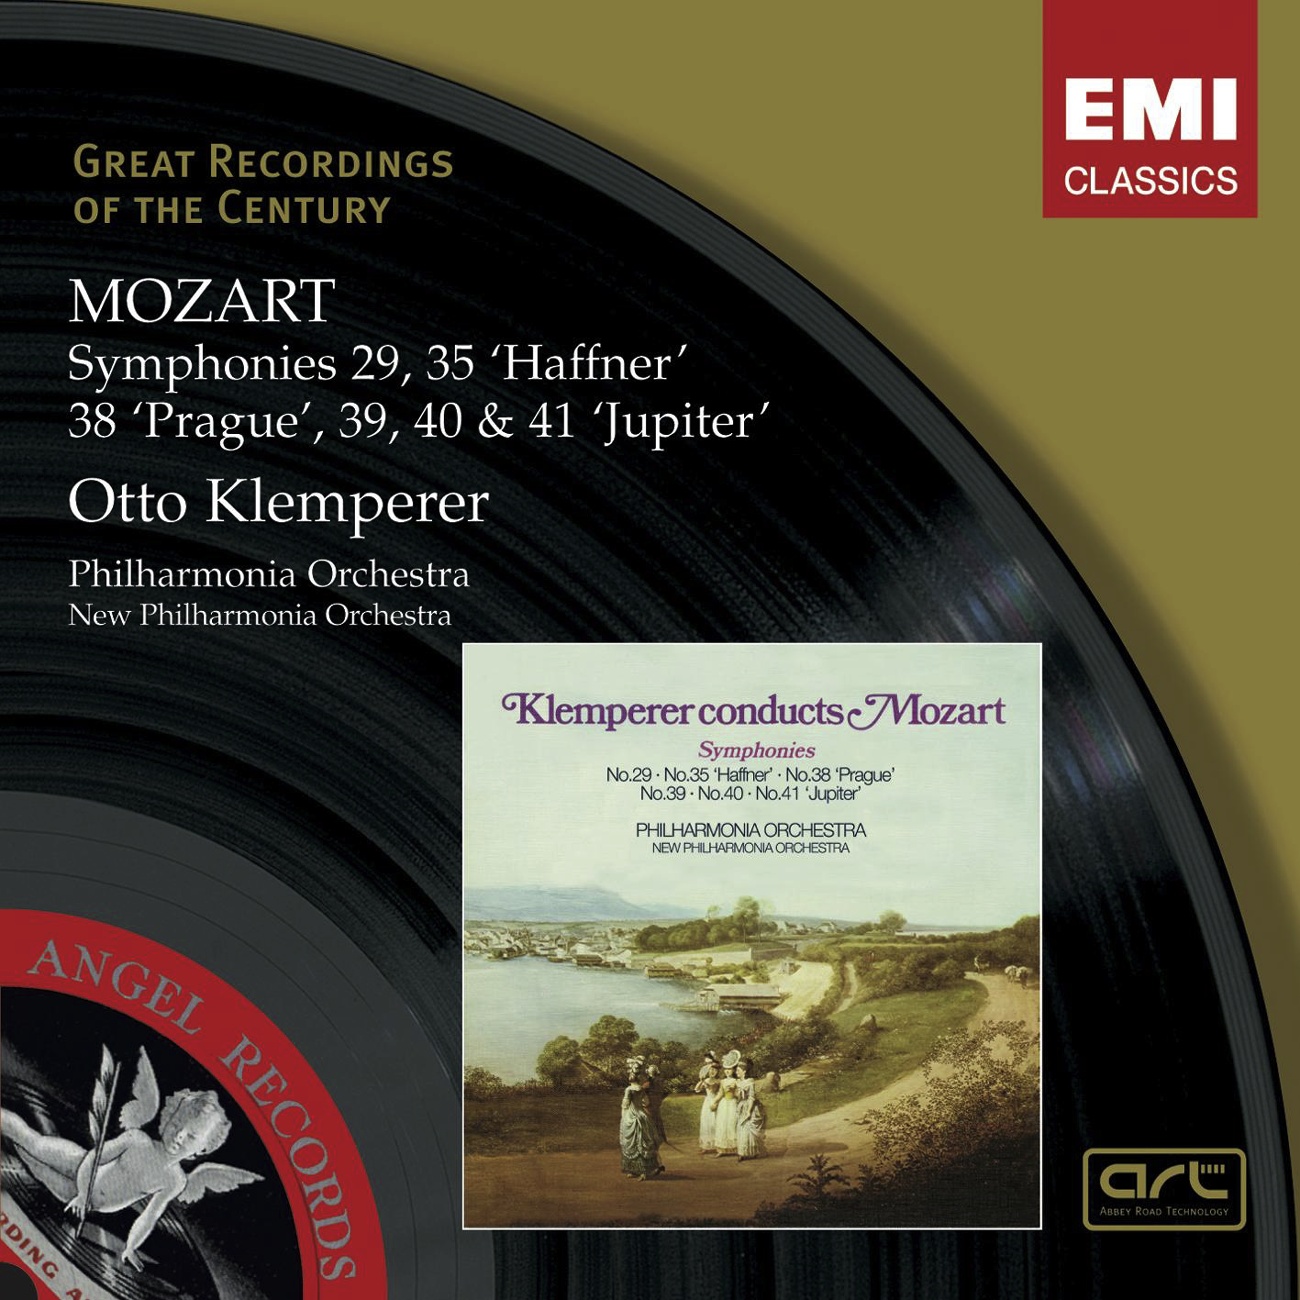 Symphony No. 29 in A K201/K186a (2000 Digital Remaster): Allegro con spirito